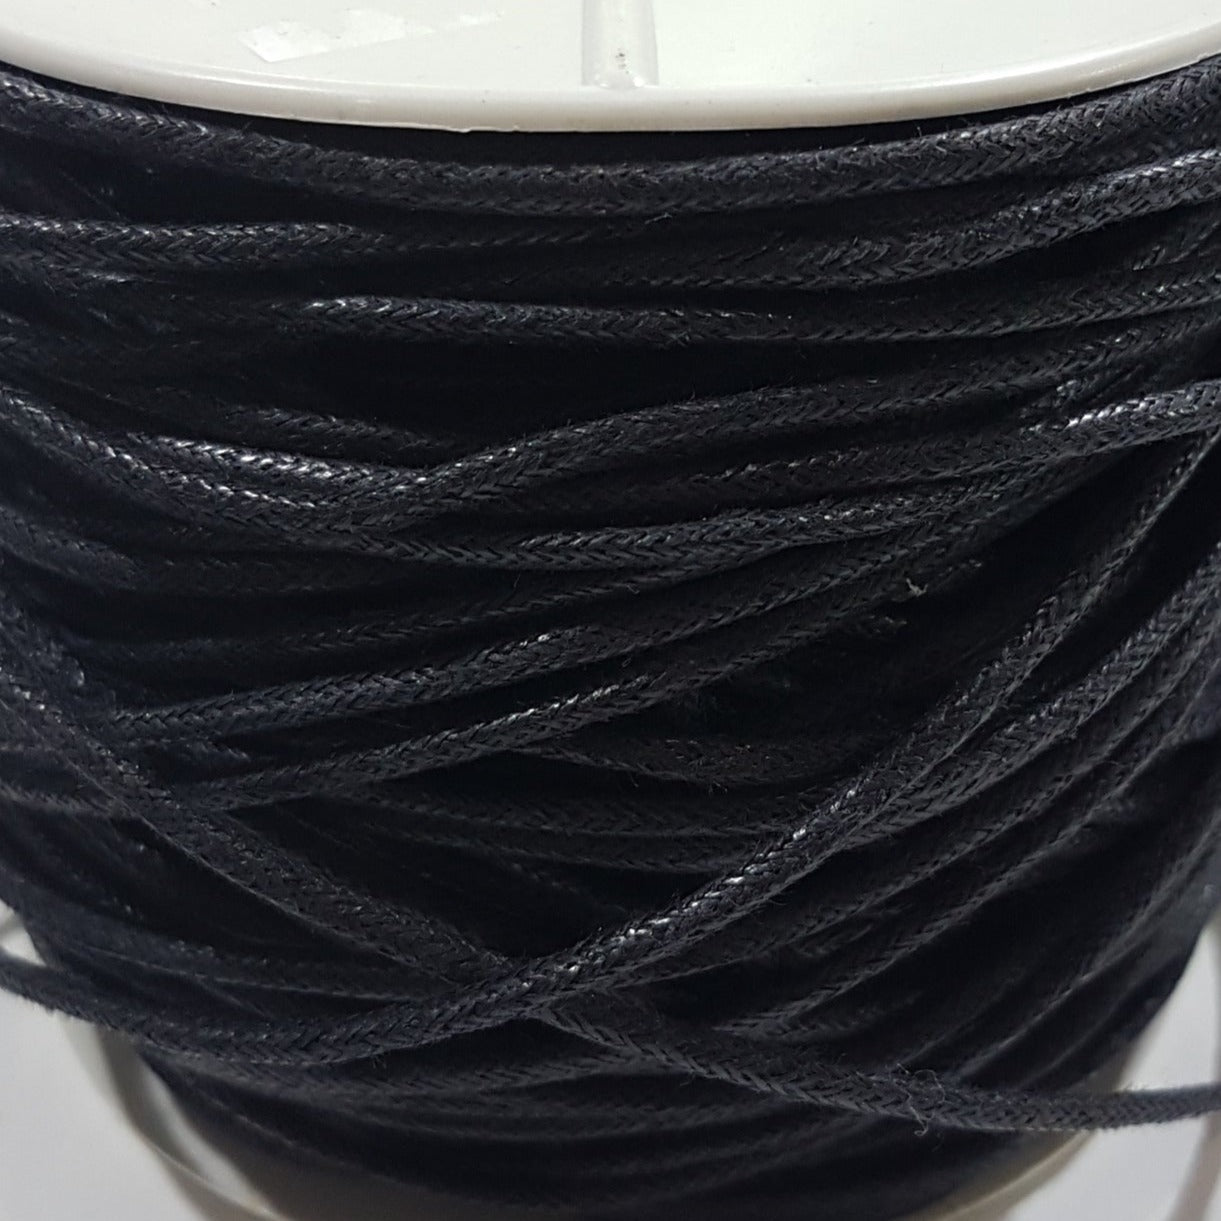 1M 3mm Cotton Black Cord